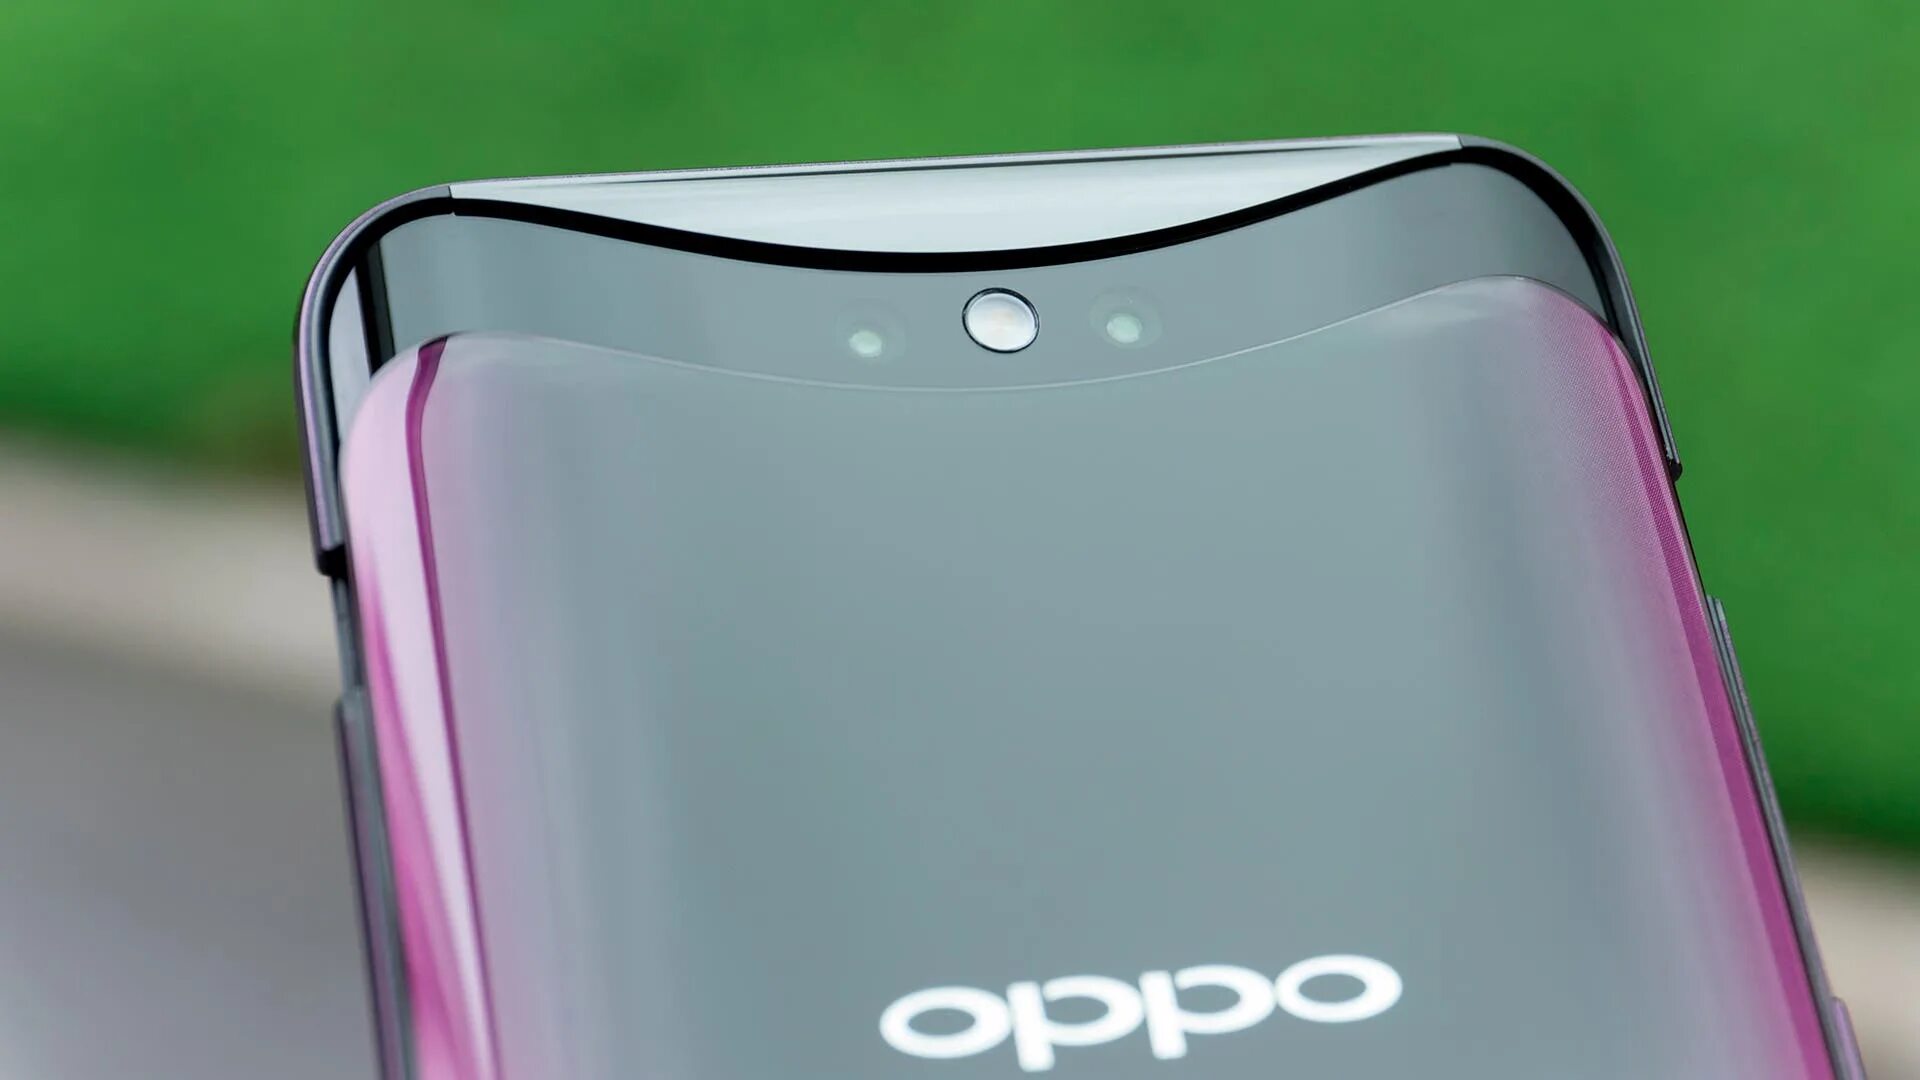 Оппо финд х7 ультра. Оппо финд икс3 камера. Oppo find x5 розовый. Oppo find x6 камера. Oppo x7 ultra 4pda